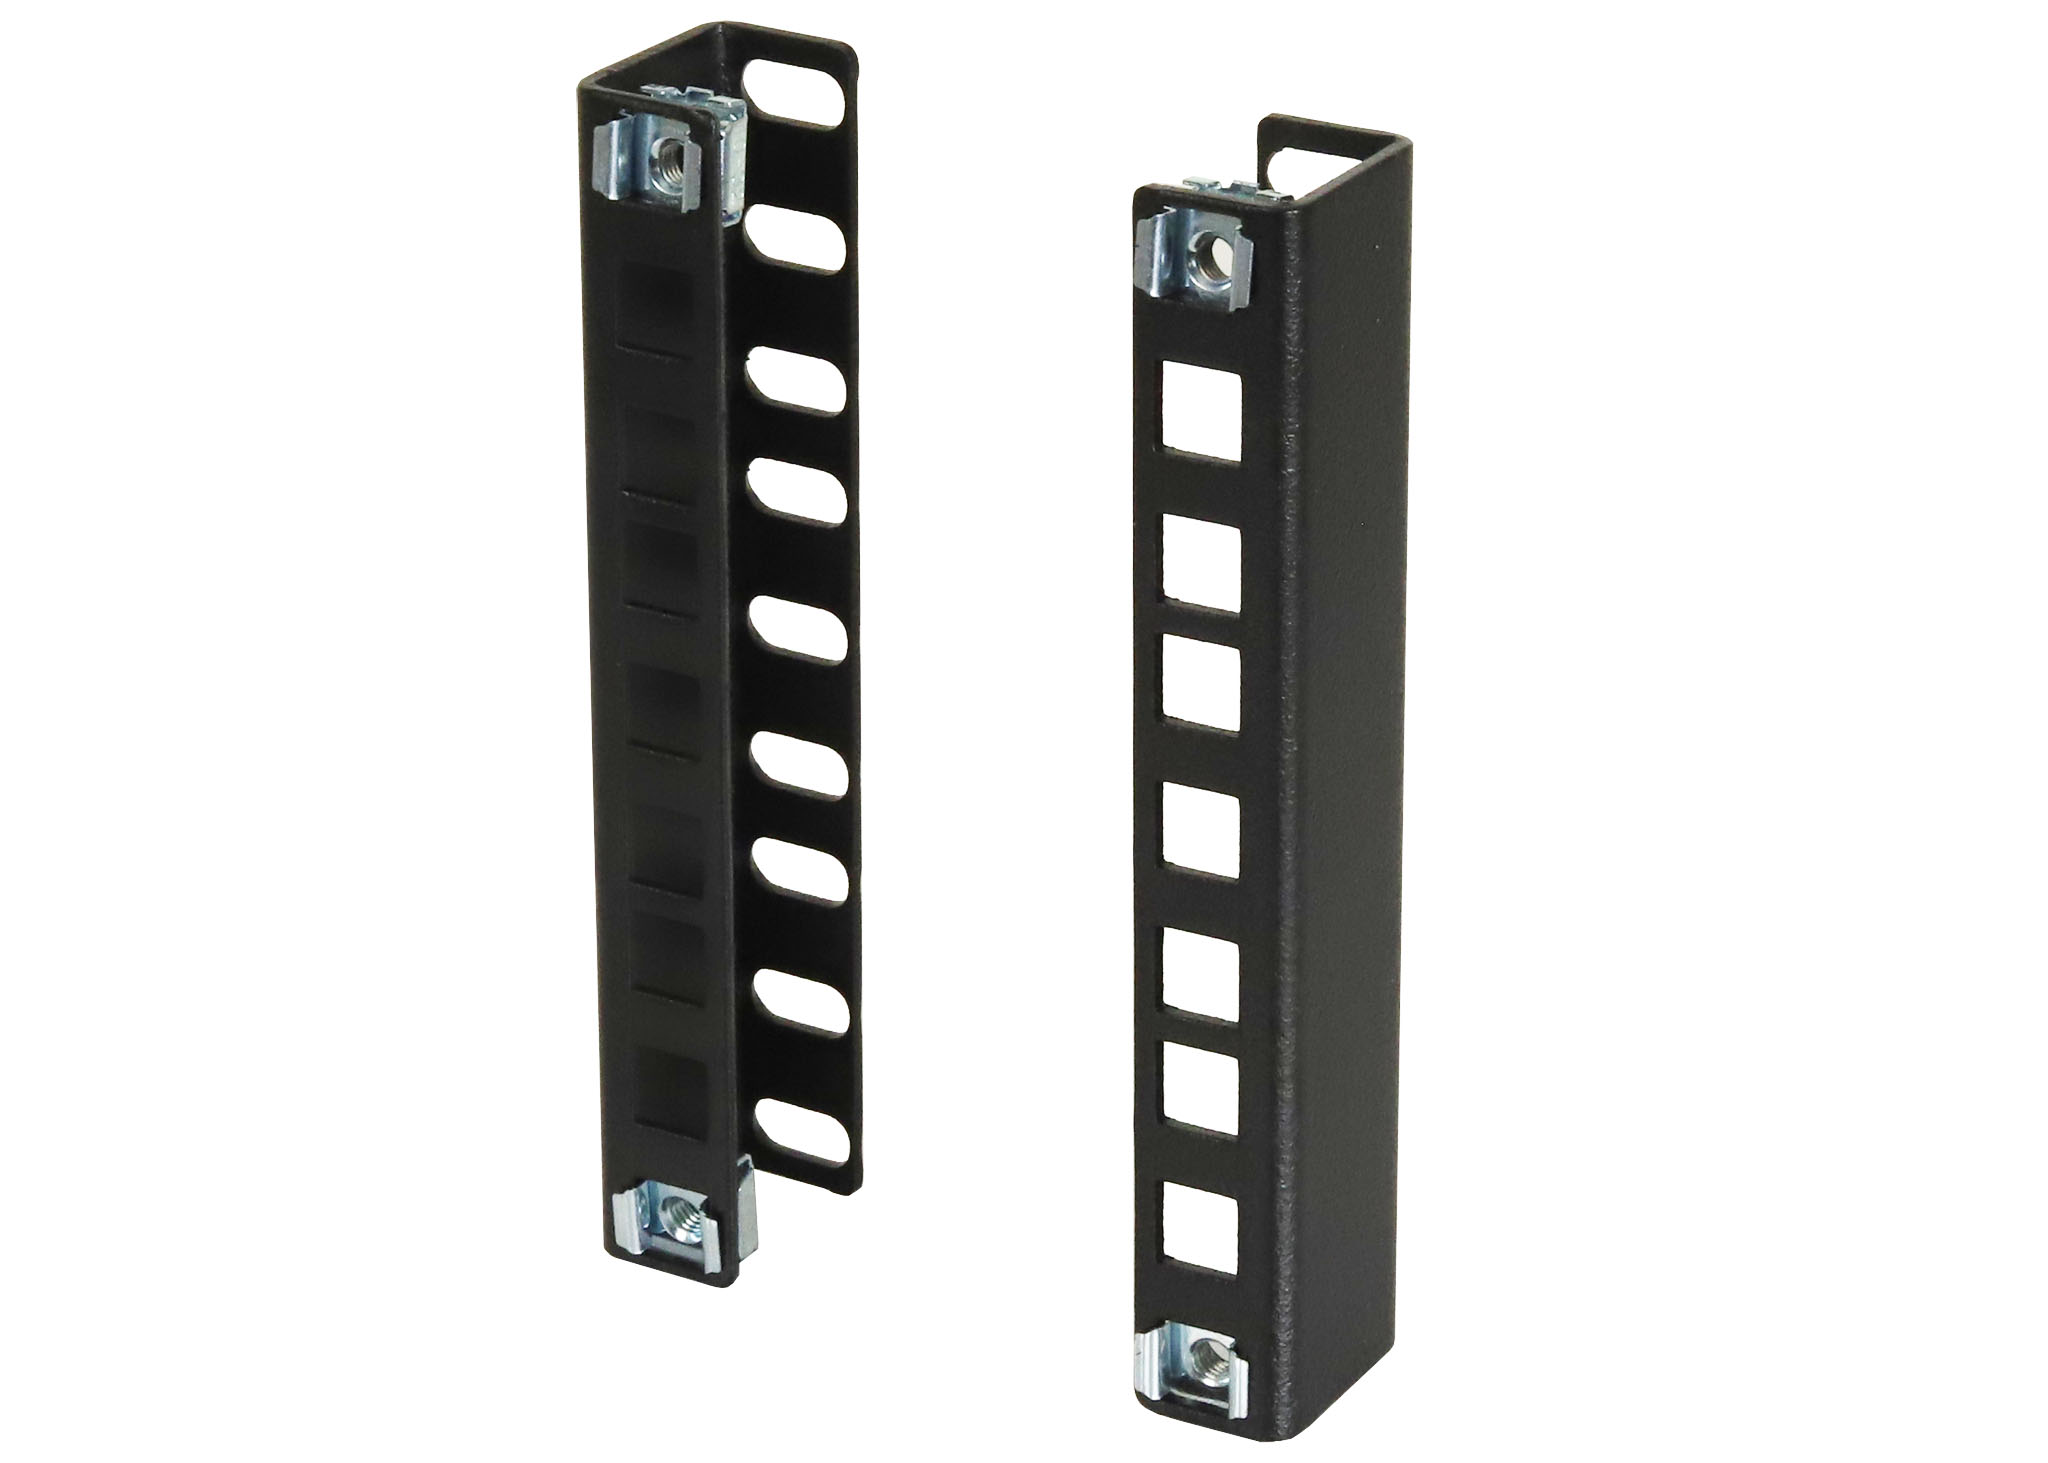 IAENCLOSURES RCB1061-3U 3U 1.1 inch rack extender brackets for EIA standard 19 inch, 23 inch and 24 inch wide rack cabinet